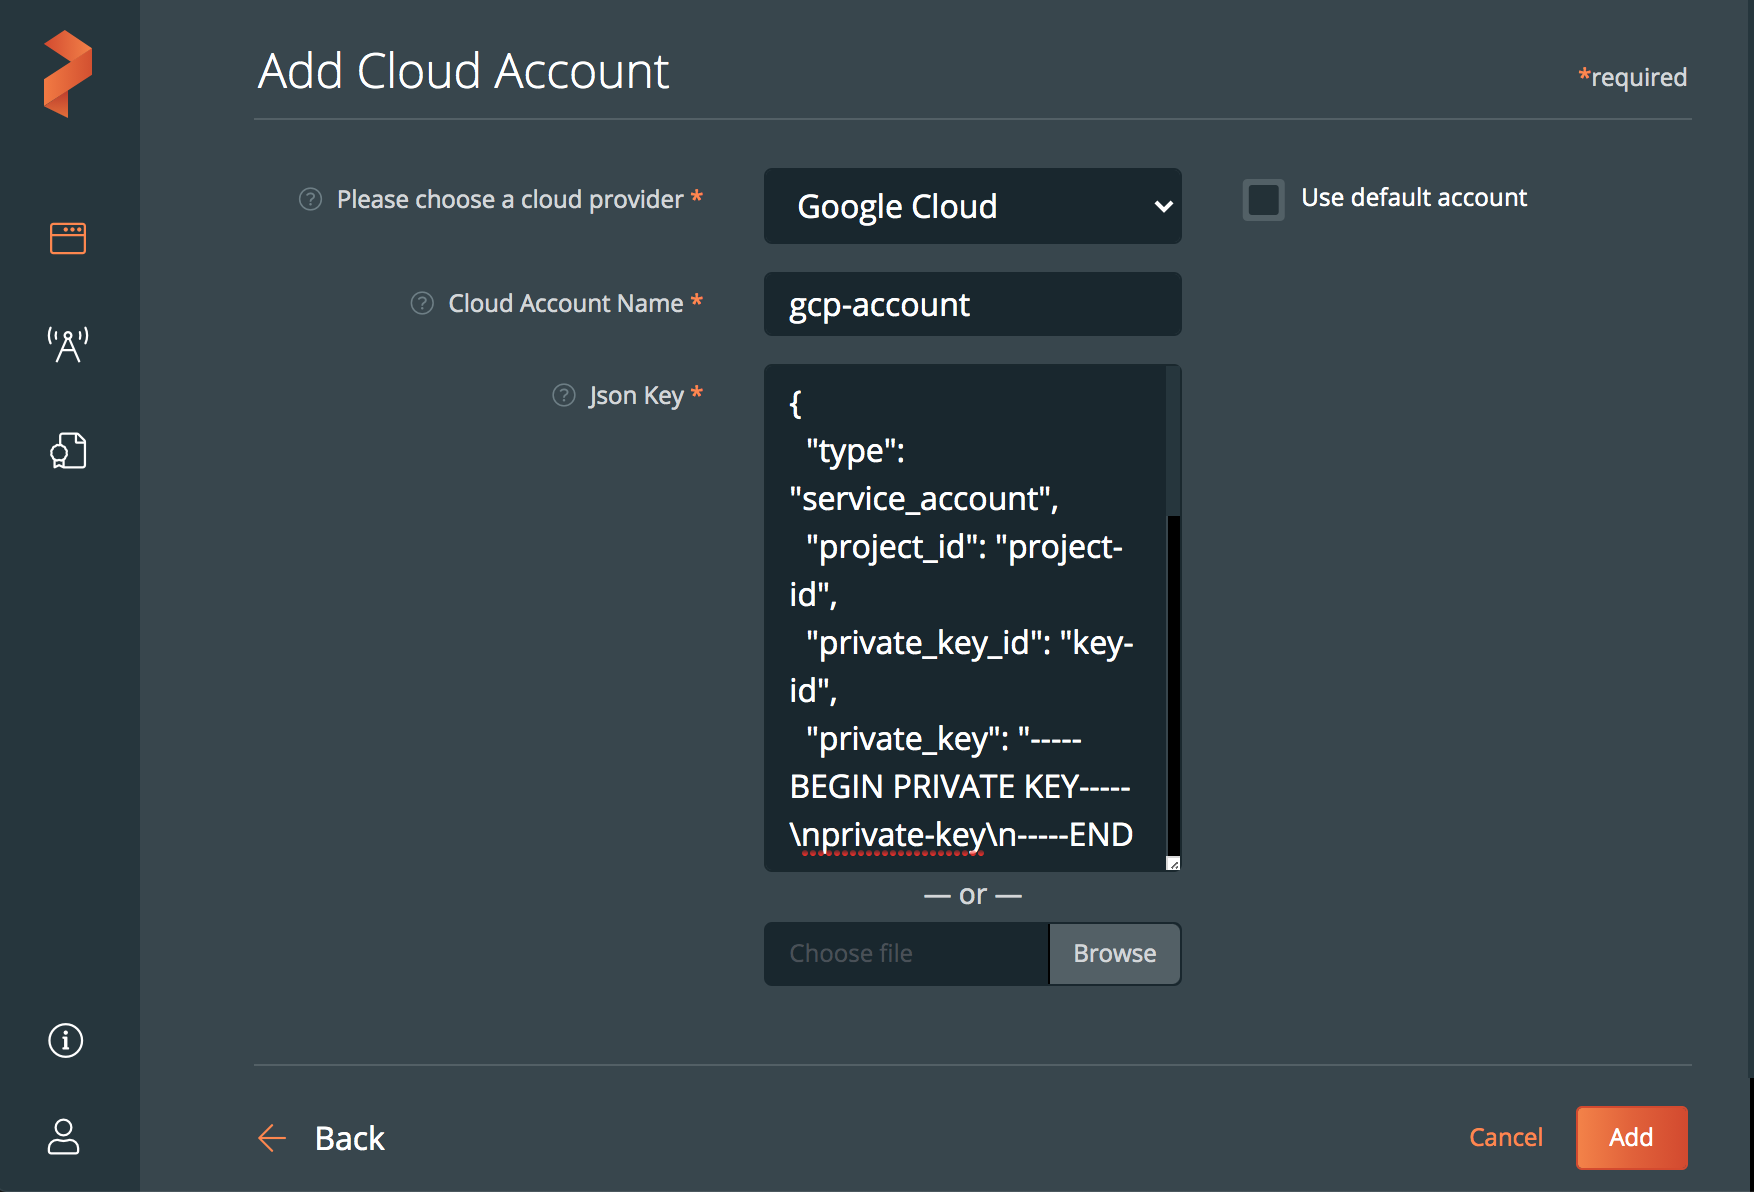 Add a Google cloud account